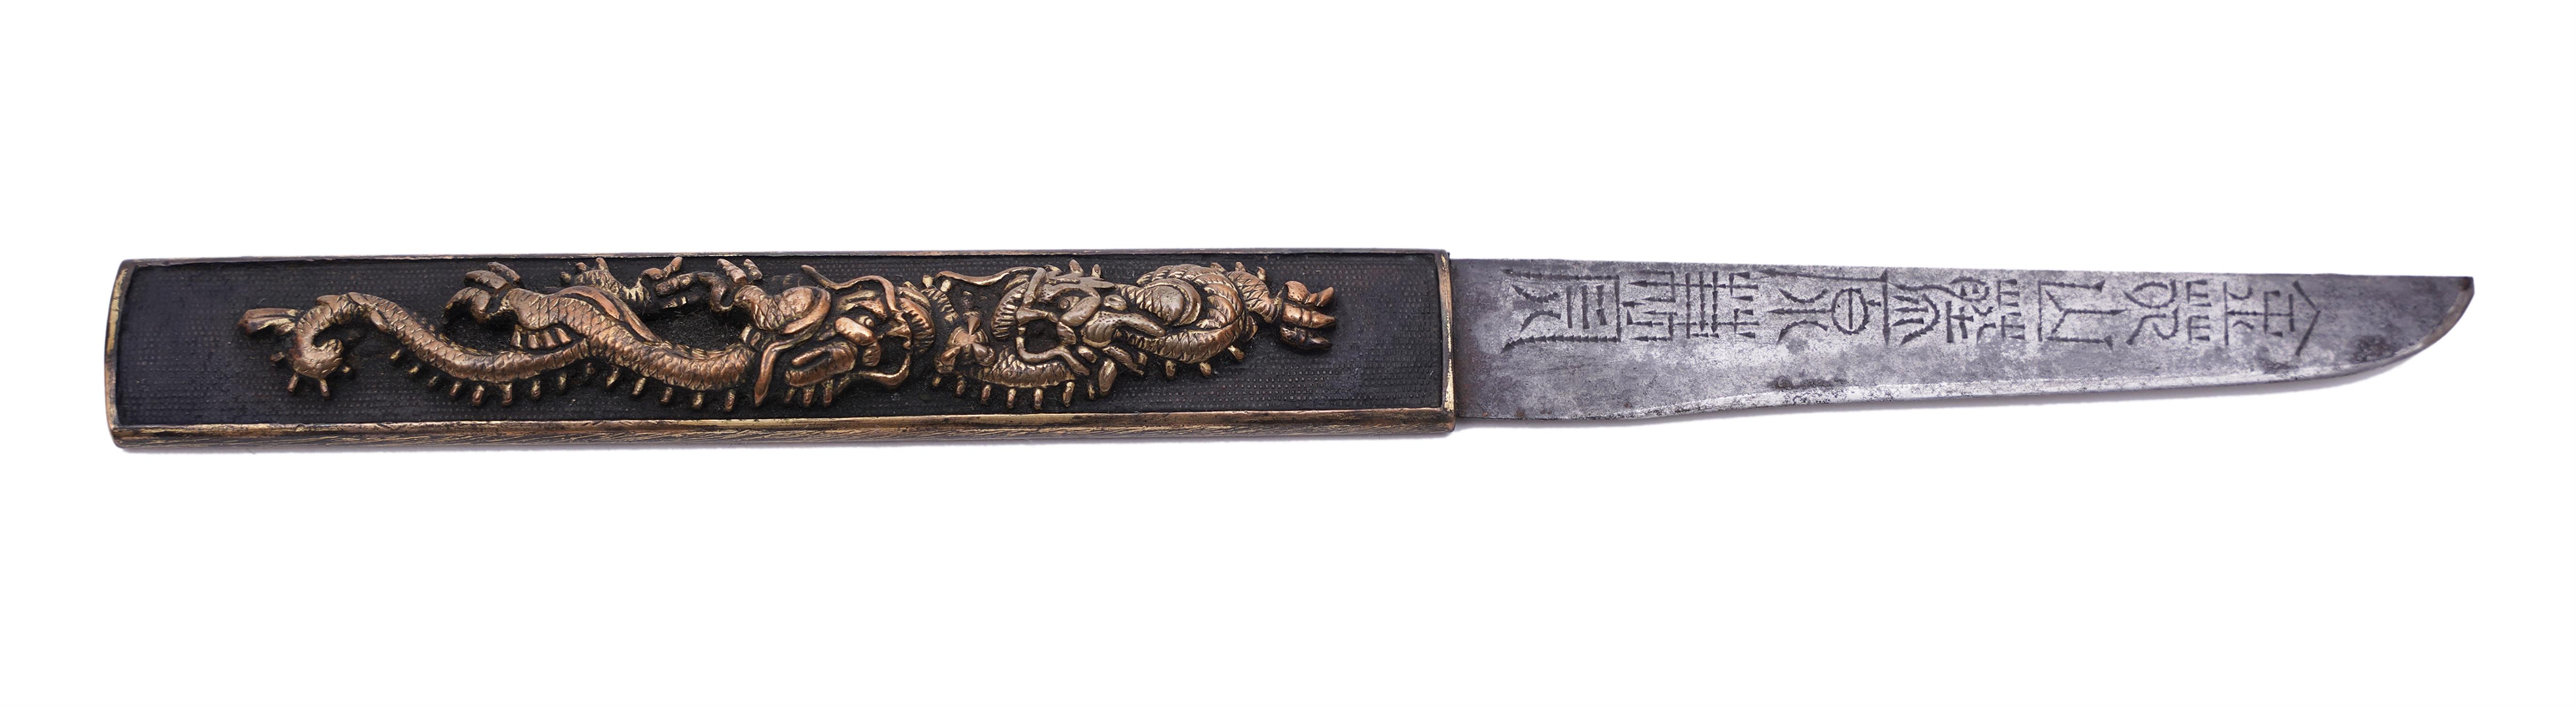 .A PAIR OF SAMURAI SWORDS, DAISHO Japan 1. Description of the katana: The katana is Shinto according - Image 11 of 24